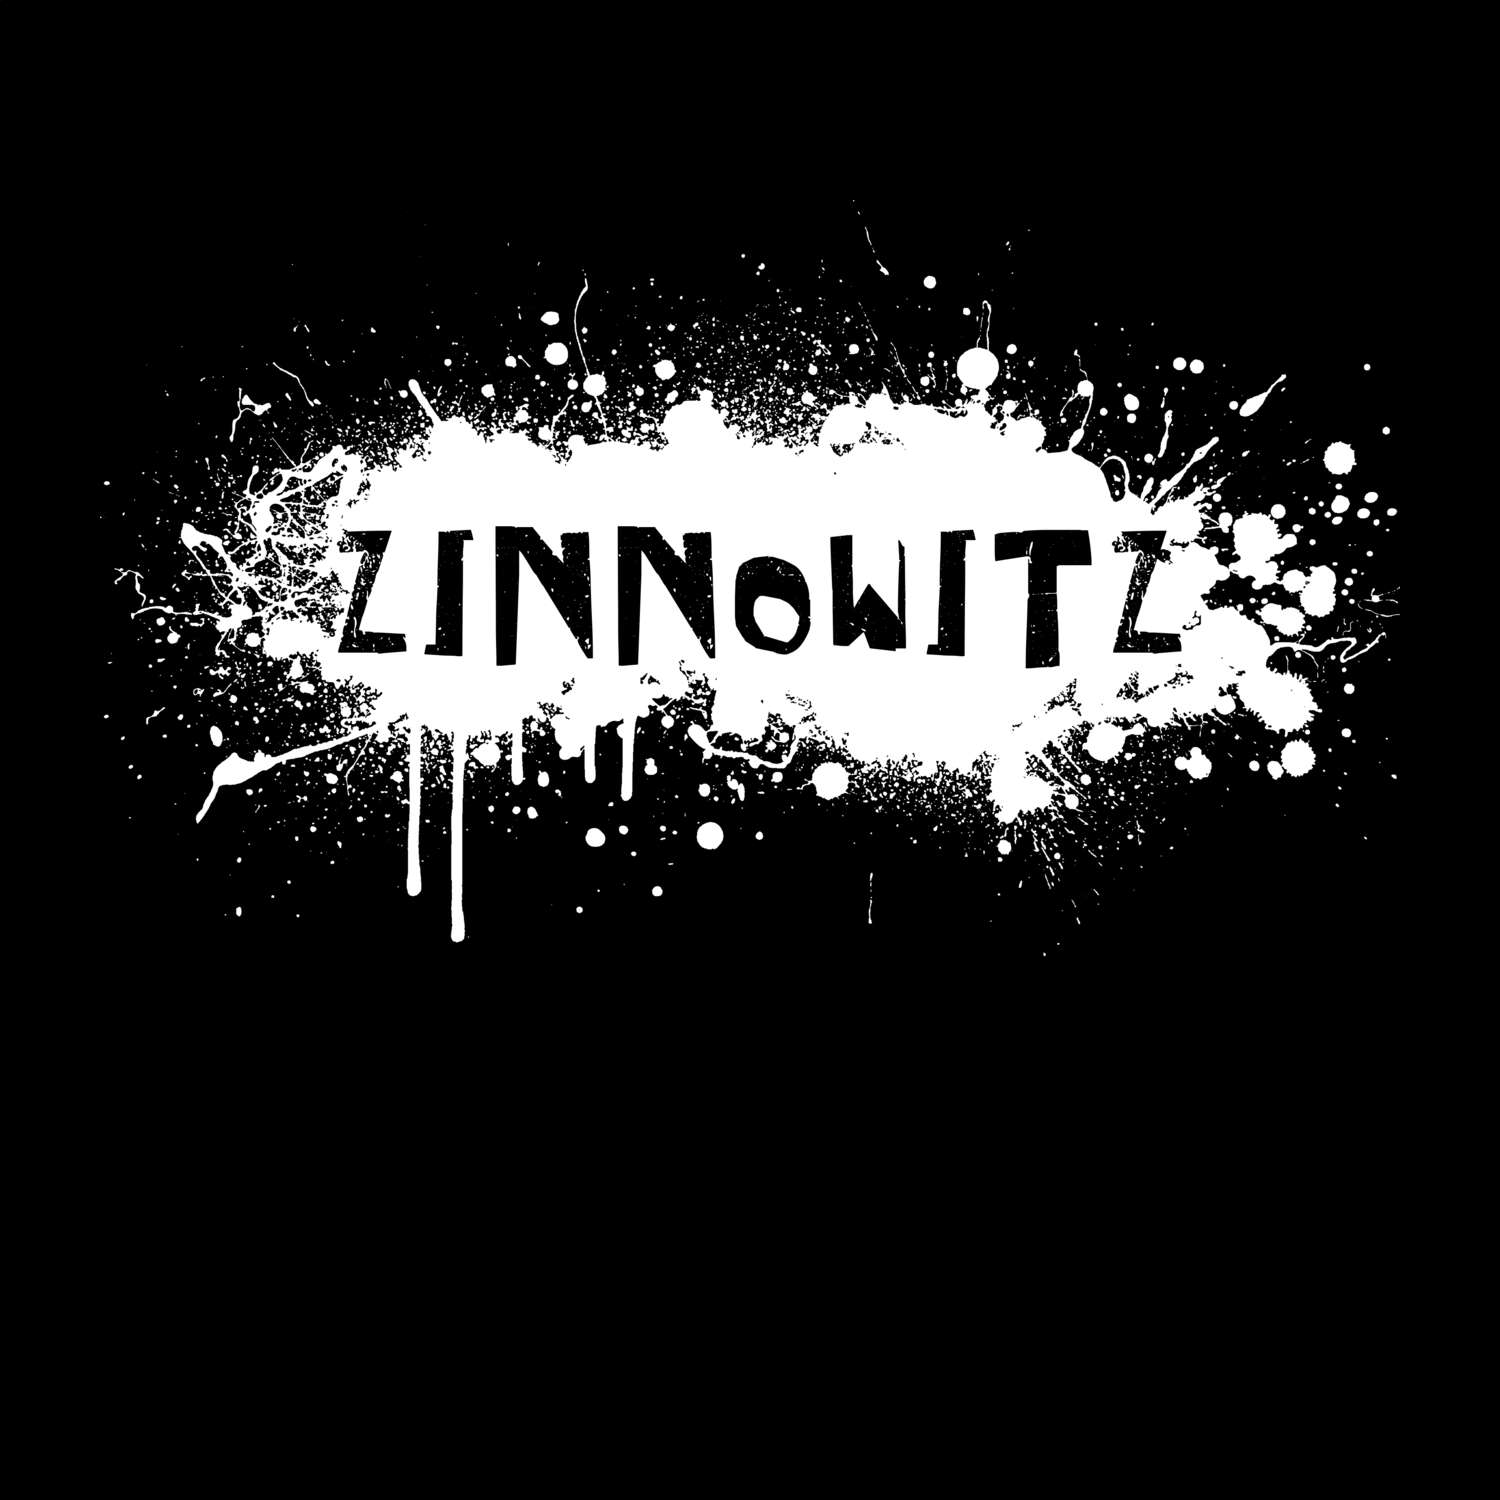 Zinnowitz T-Shirt »Paint Splash Punk«